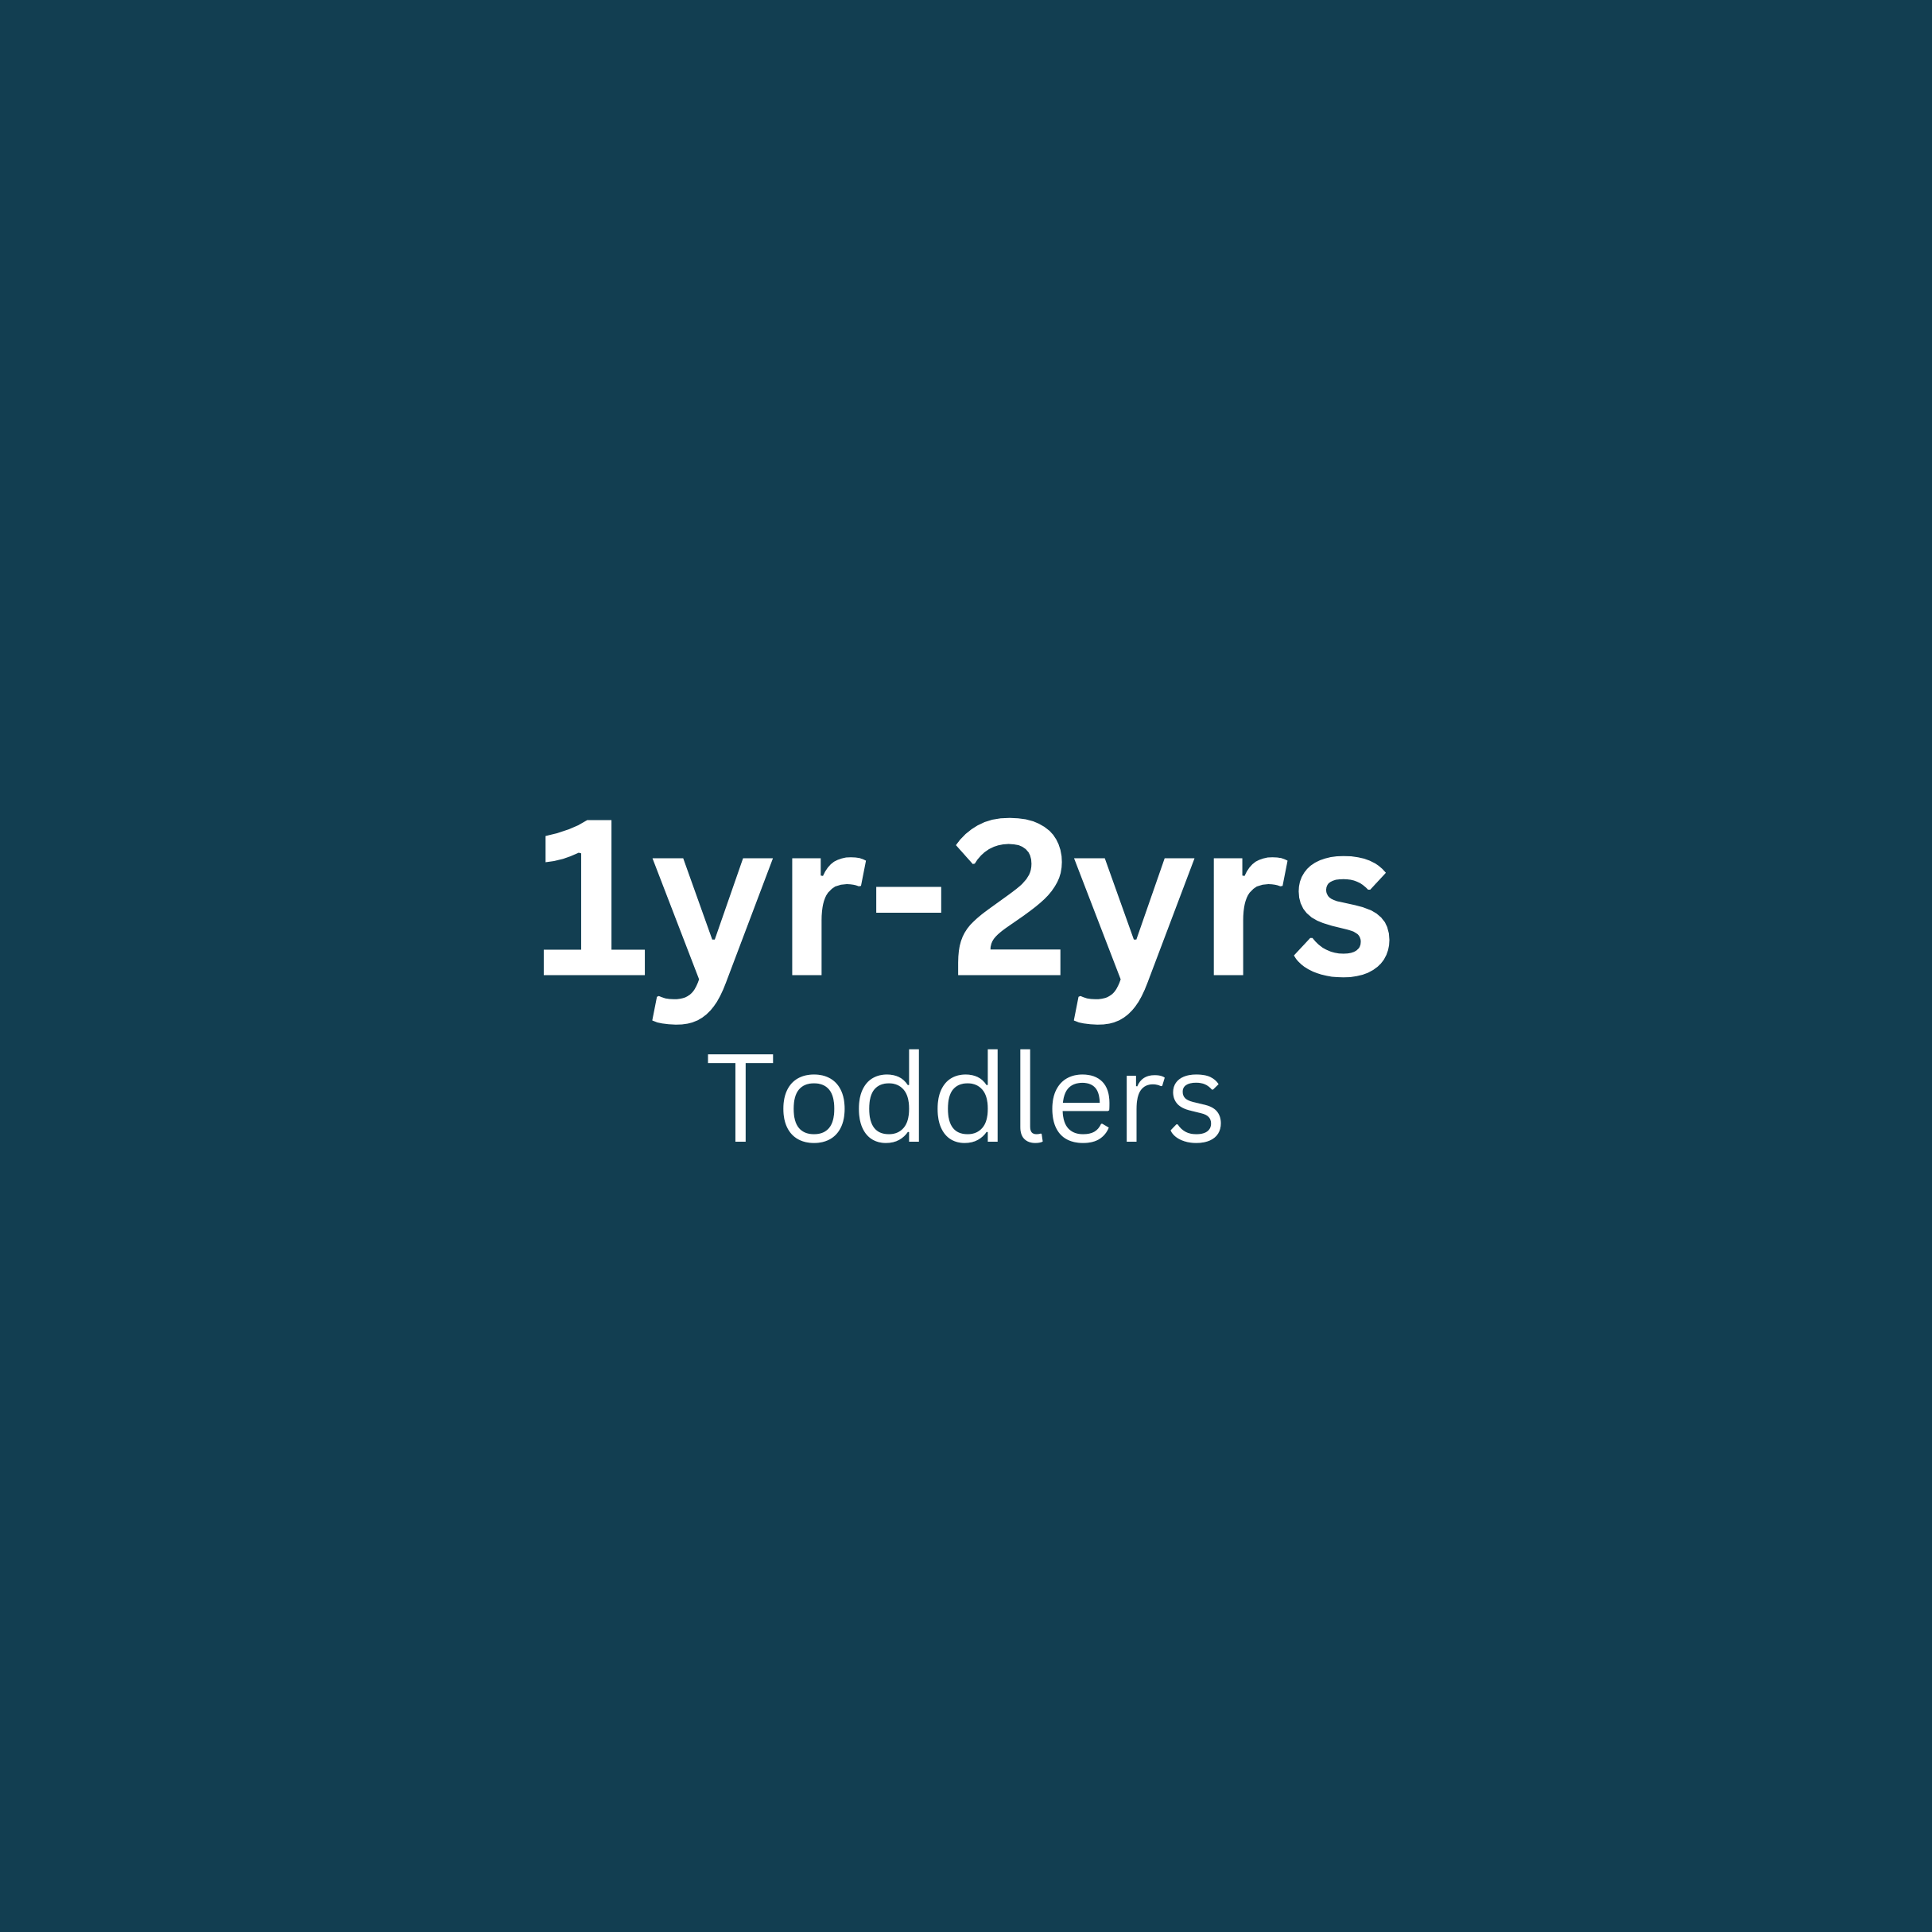 Toddlers 1yr-2yrs